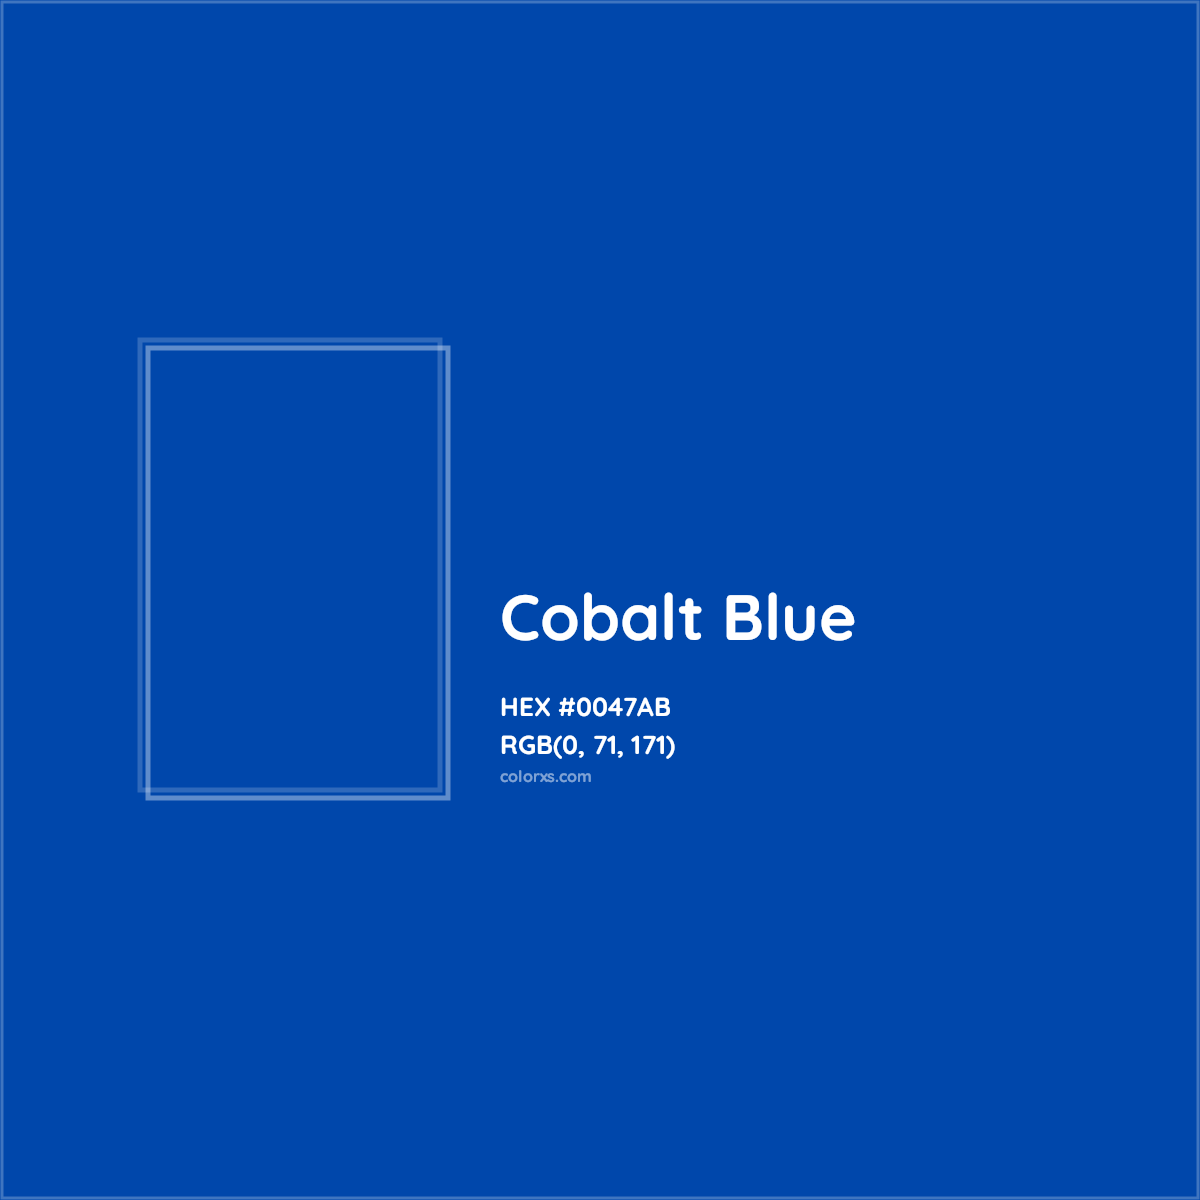 1. "Cobalt Blue and Gold Nail Art" - wide 1